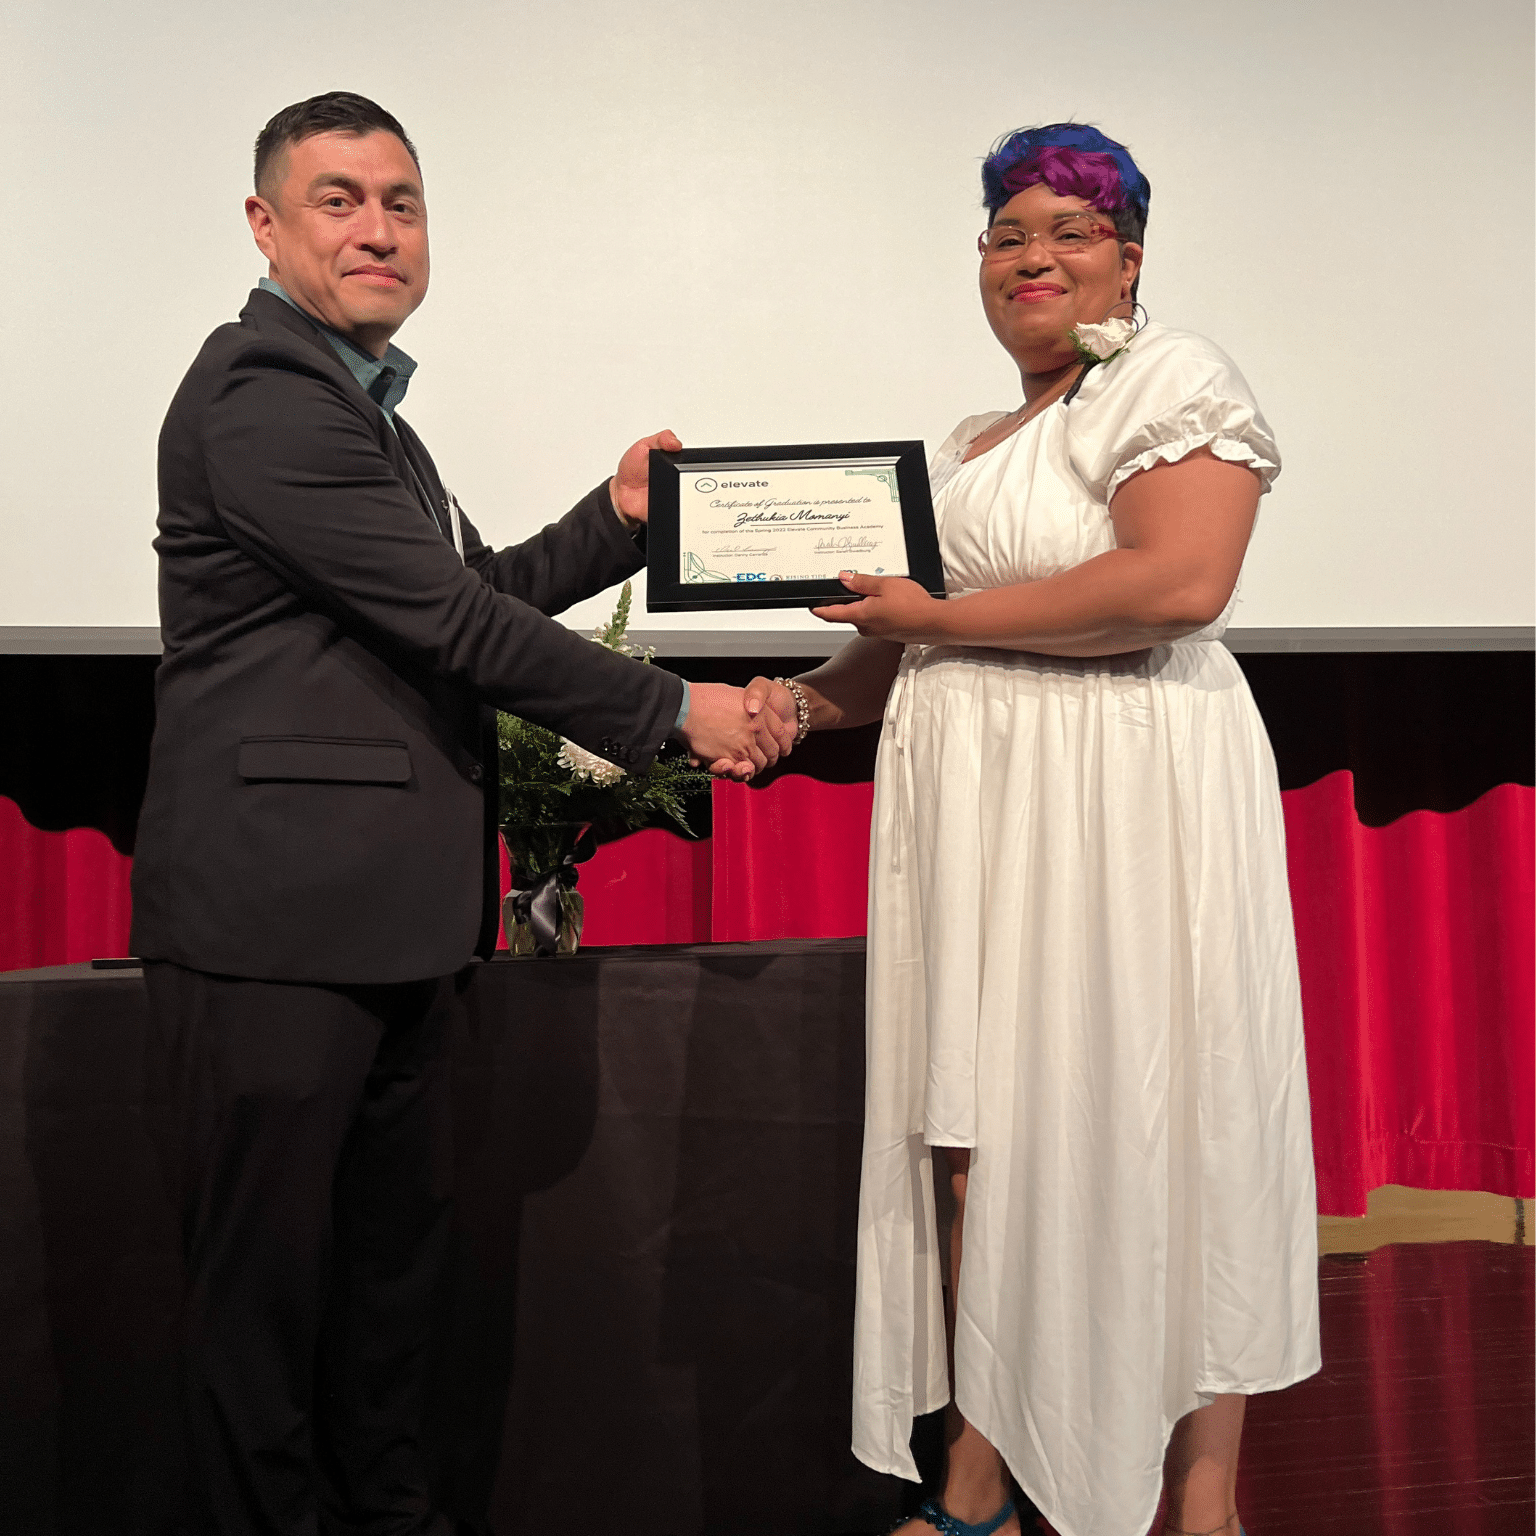 elevate participant receiving award